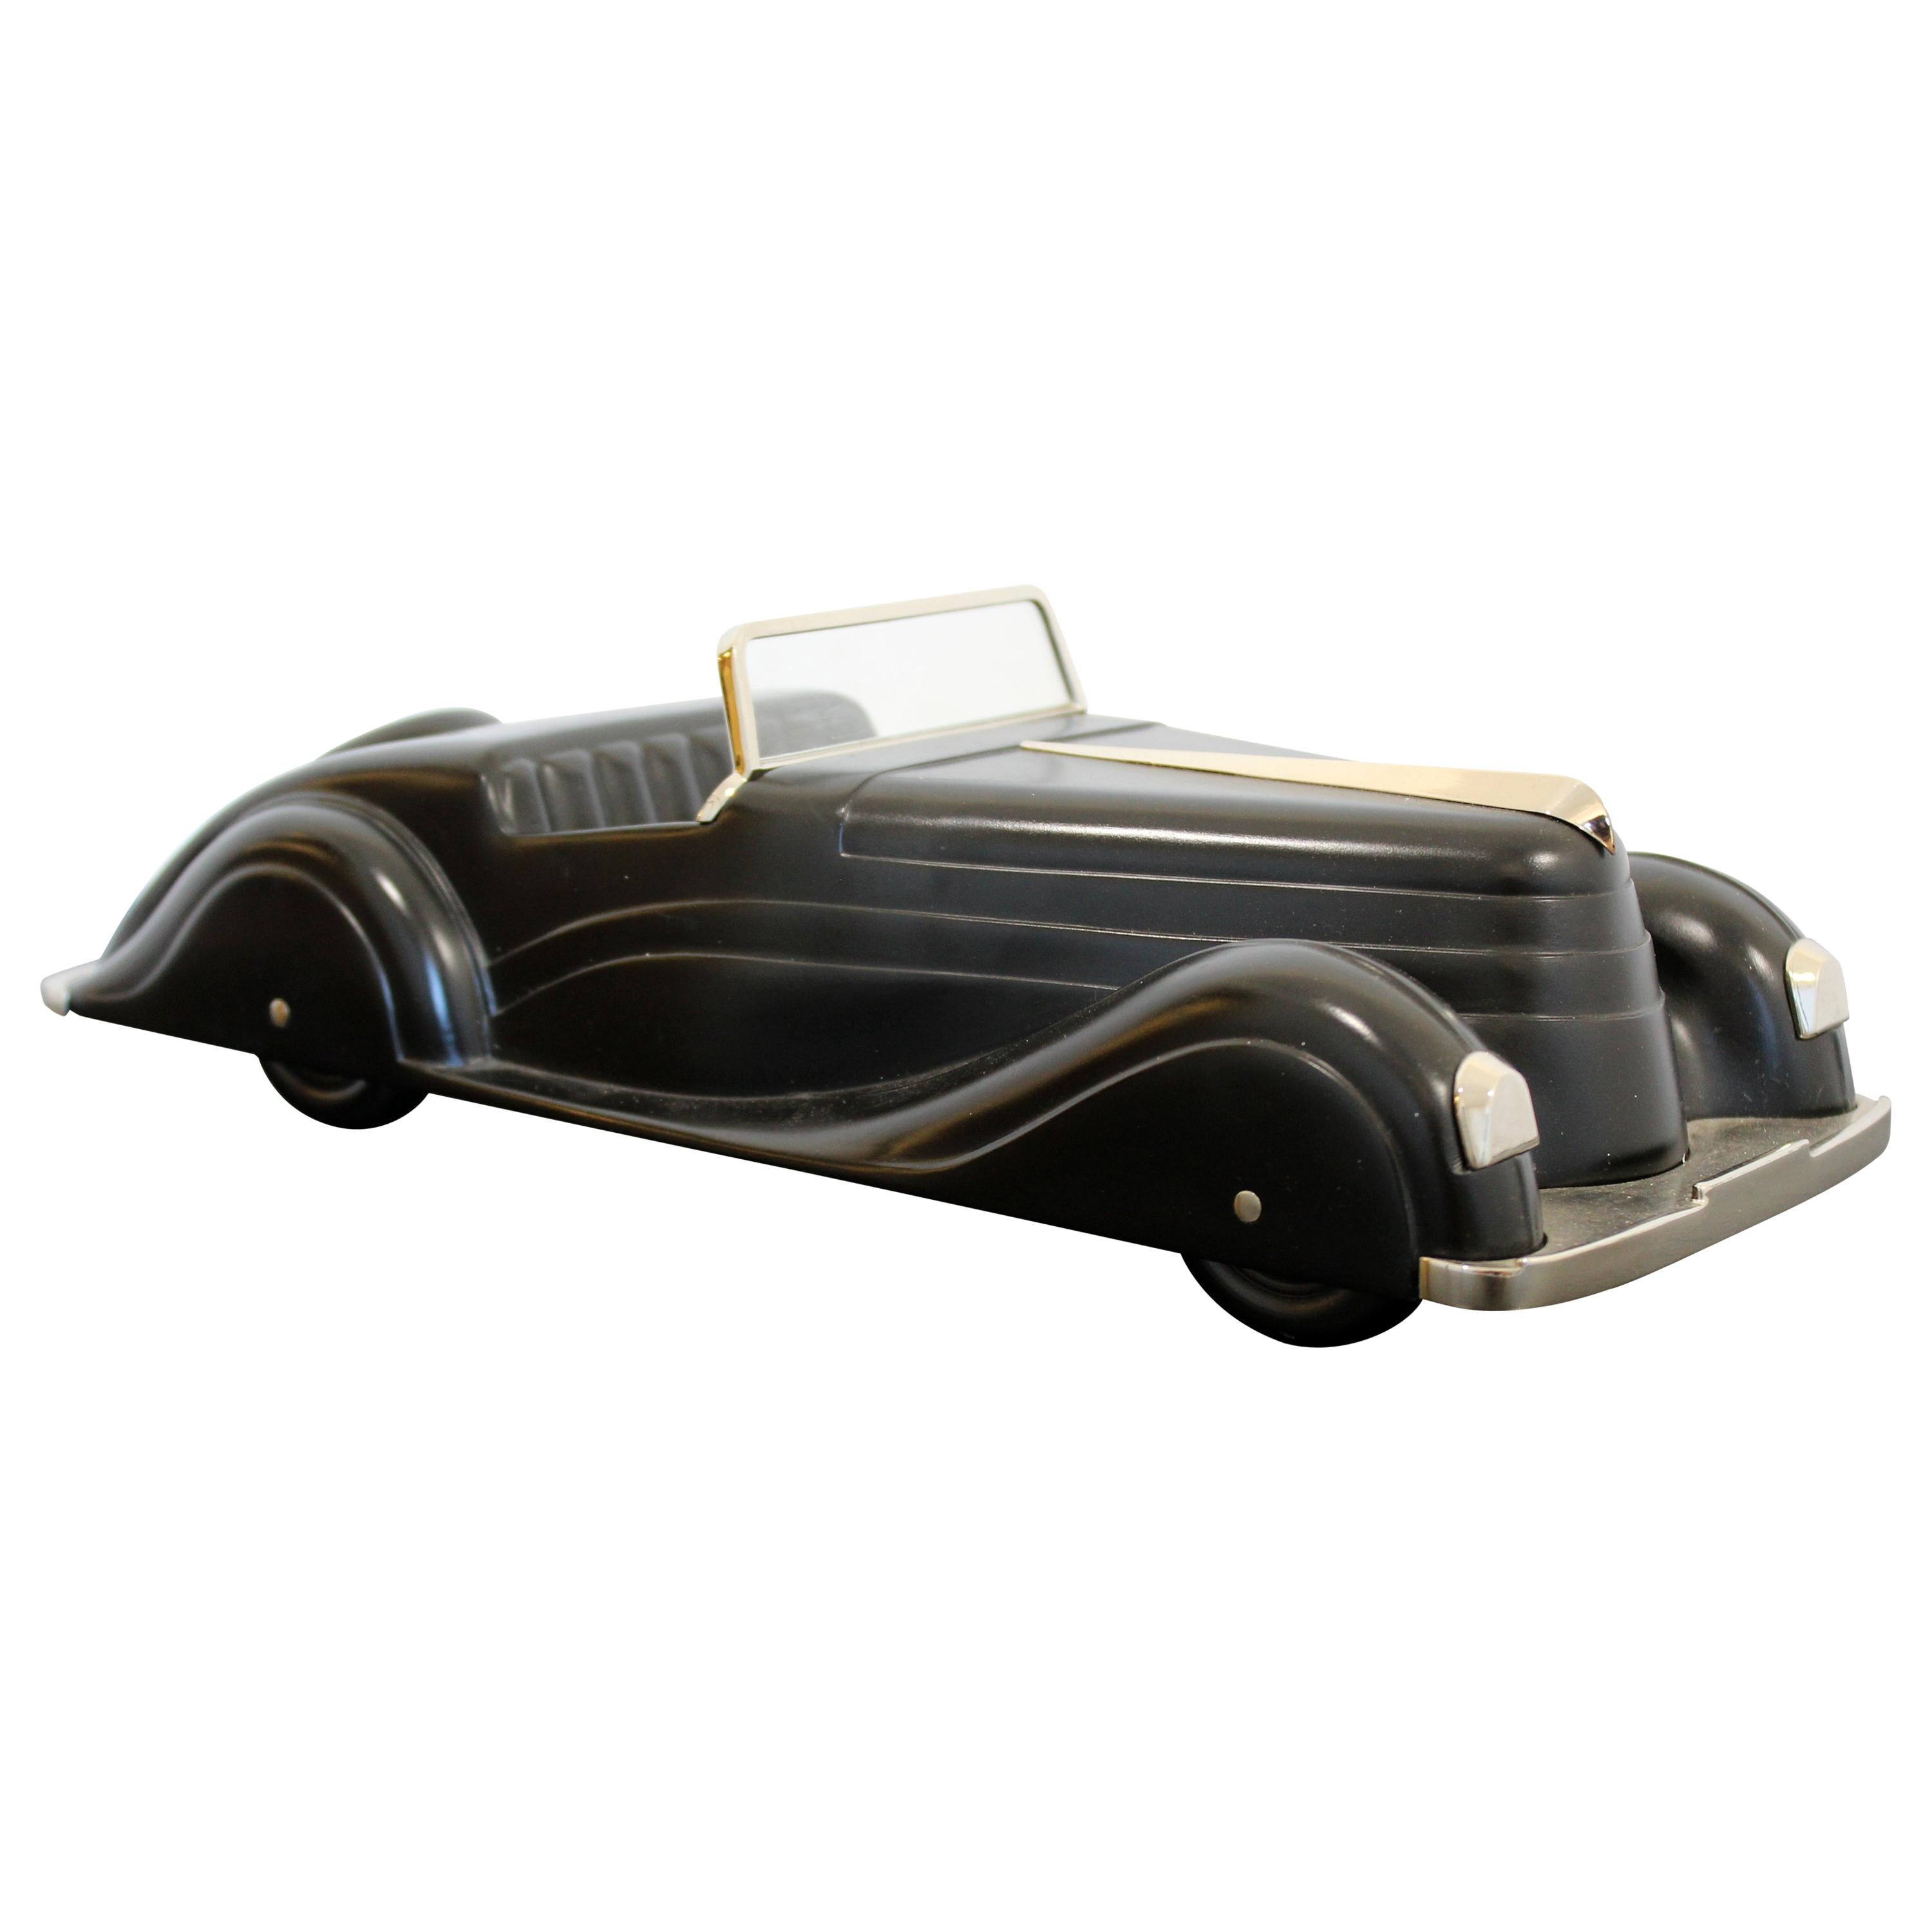 Art Deco Style Modern Ralph Lauren Black Mercedes Model Car Table Sculpture